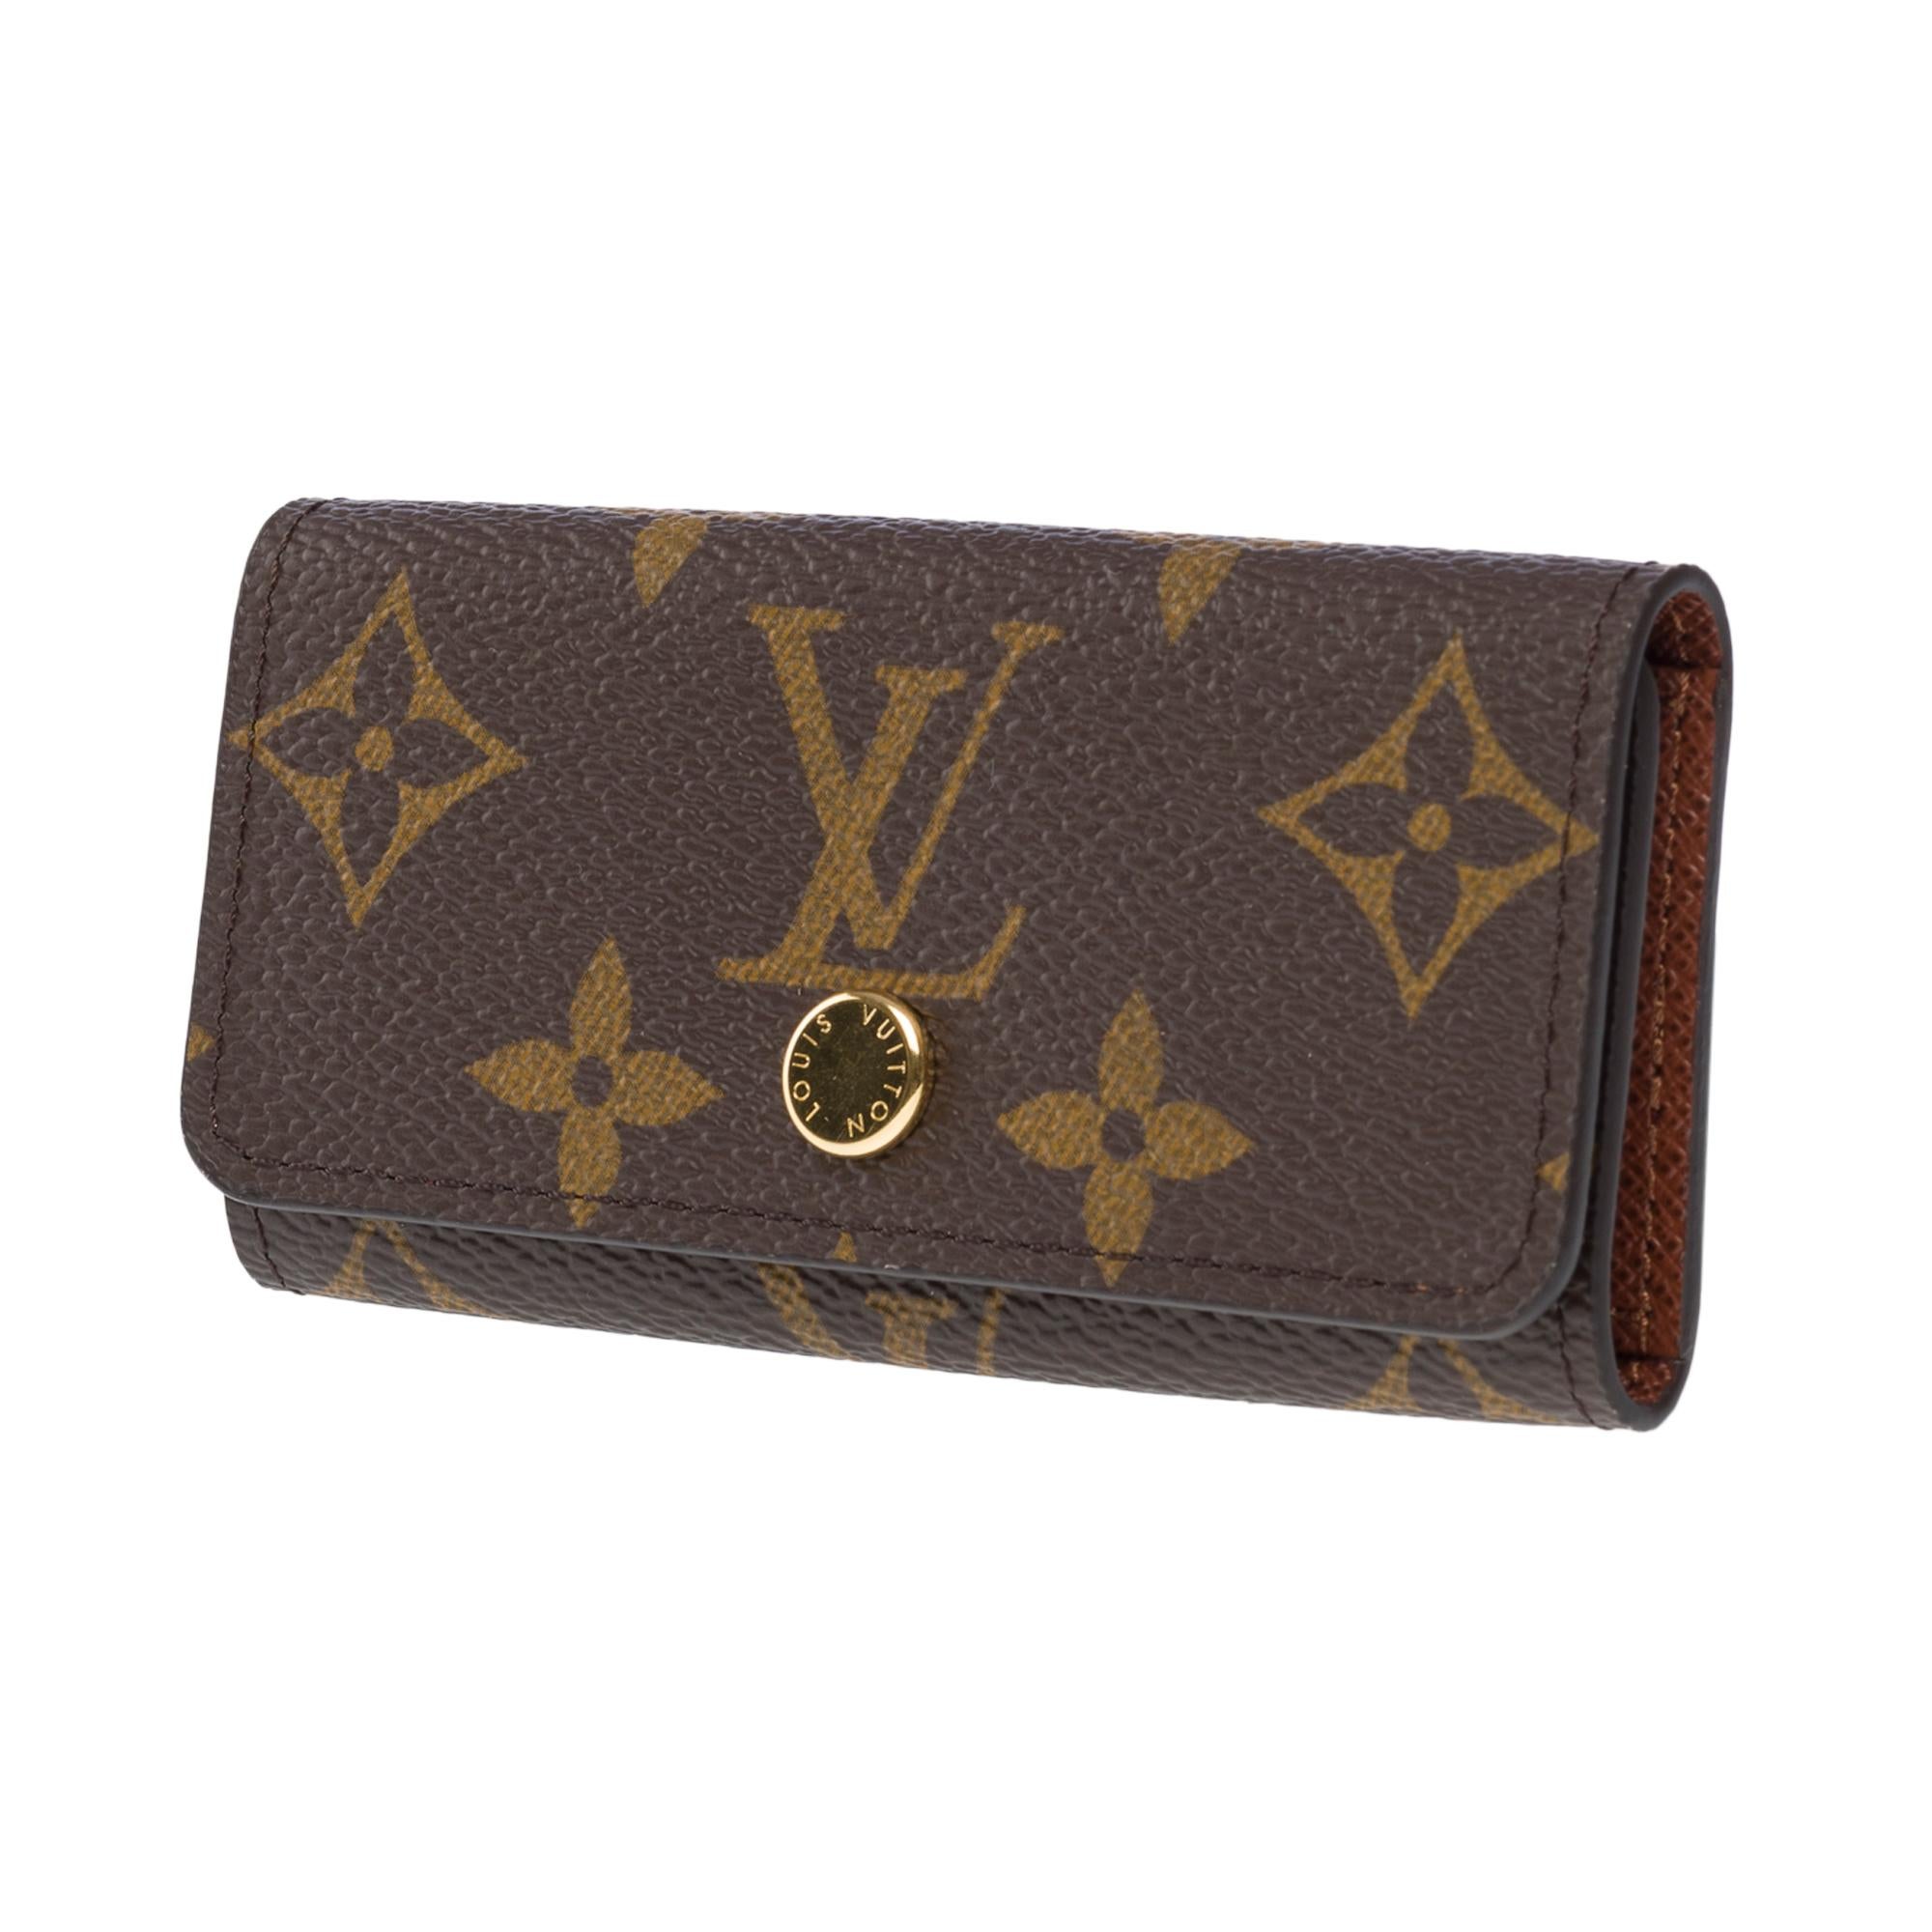 New Louis Vuitton Keychain in brown monogram canvas, GHW For Sale 1